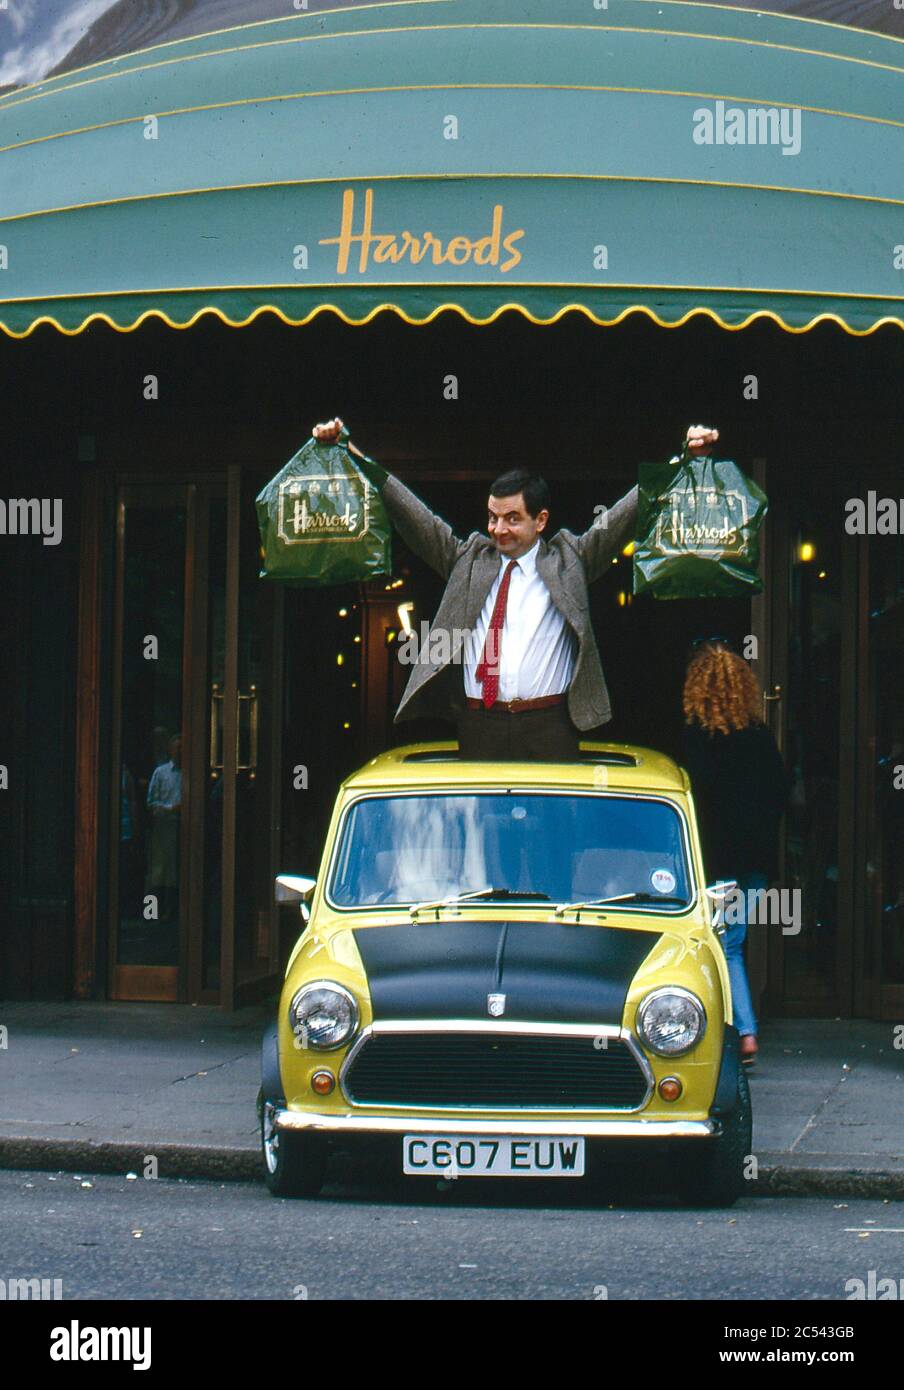 Rowan Atkinson filming Mr Bean at Harrods with Mel Smith 1996 Stock Photo